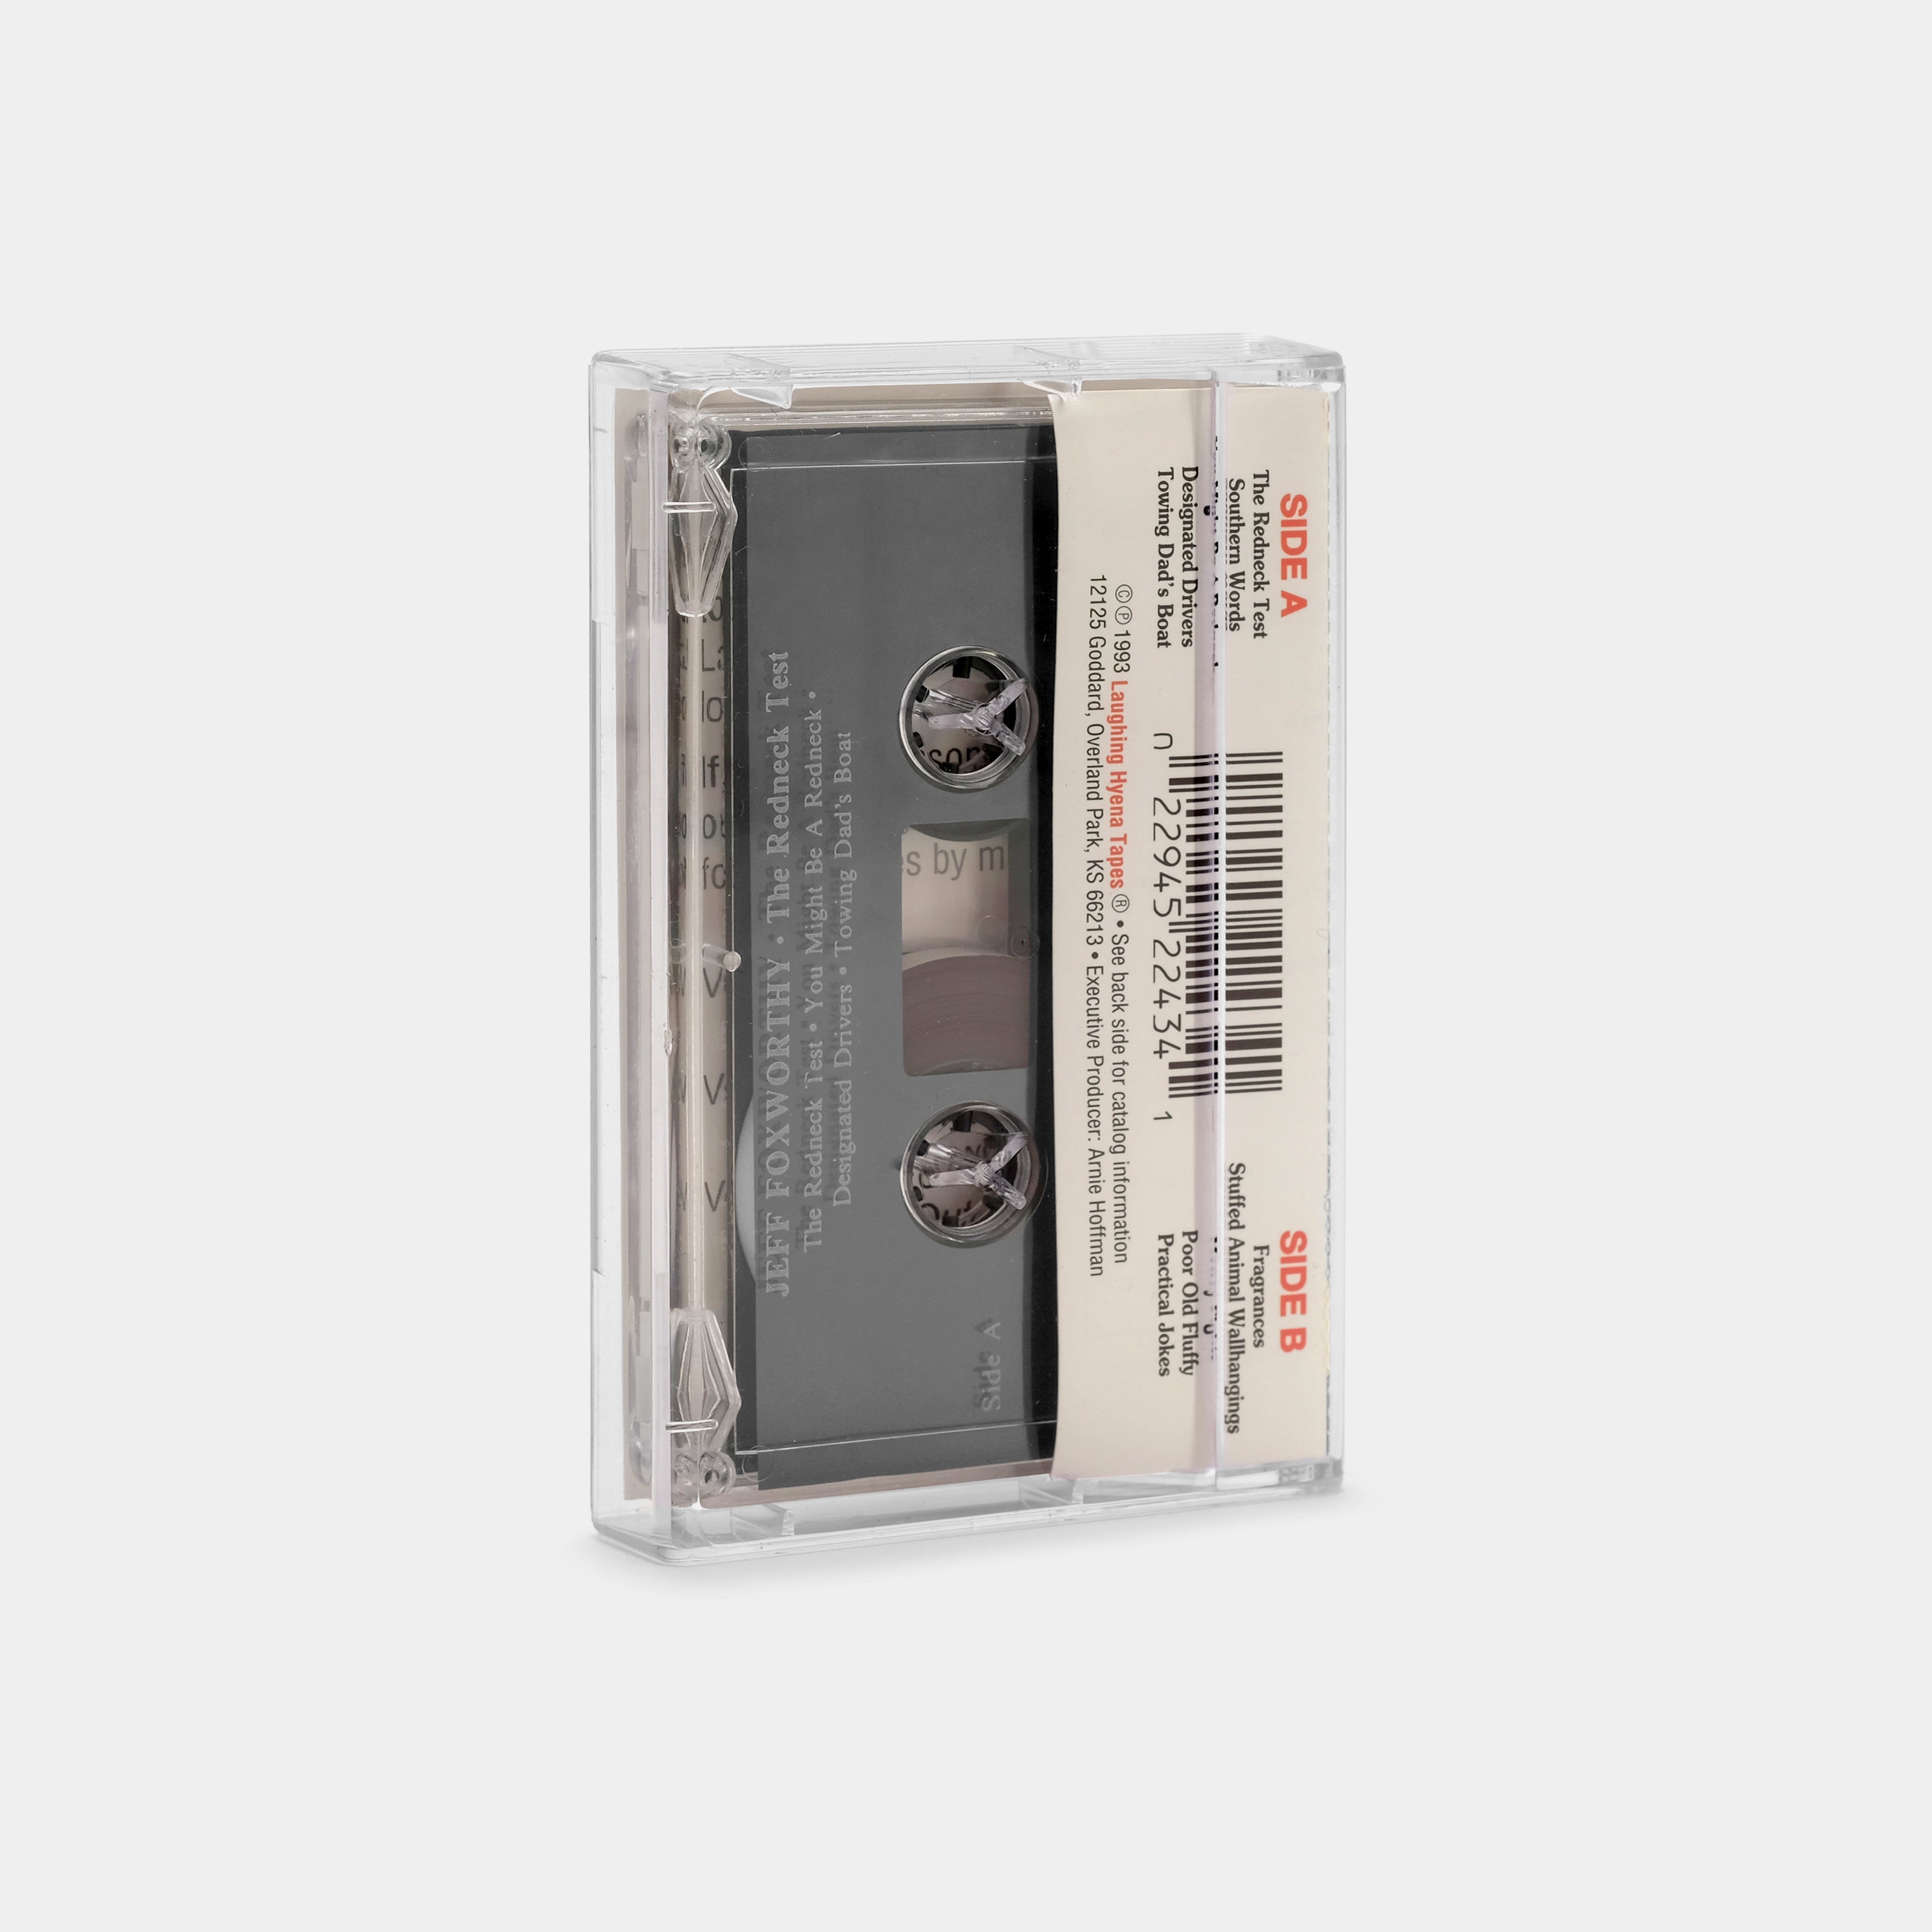 Jeff Foxworthy - The Redneck Test Cassette Tape